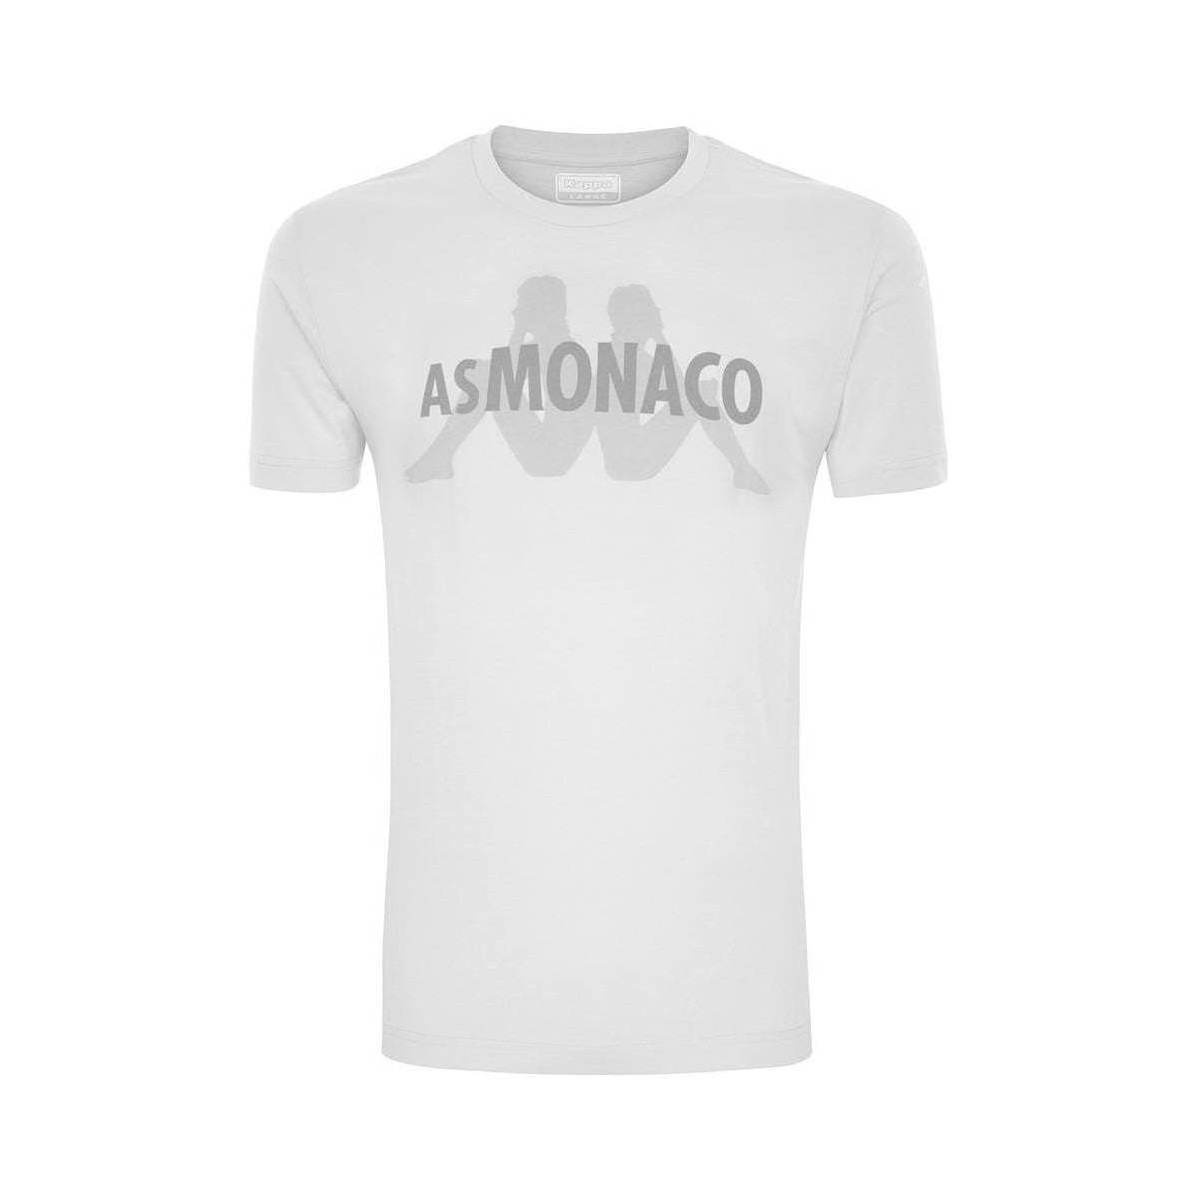 Kappa Blanc T-shirt Avlei As Monaco EuwGIrh5